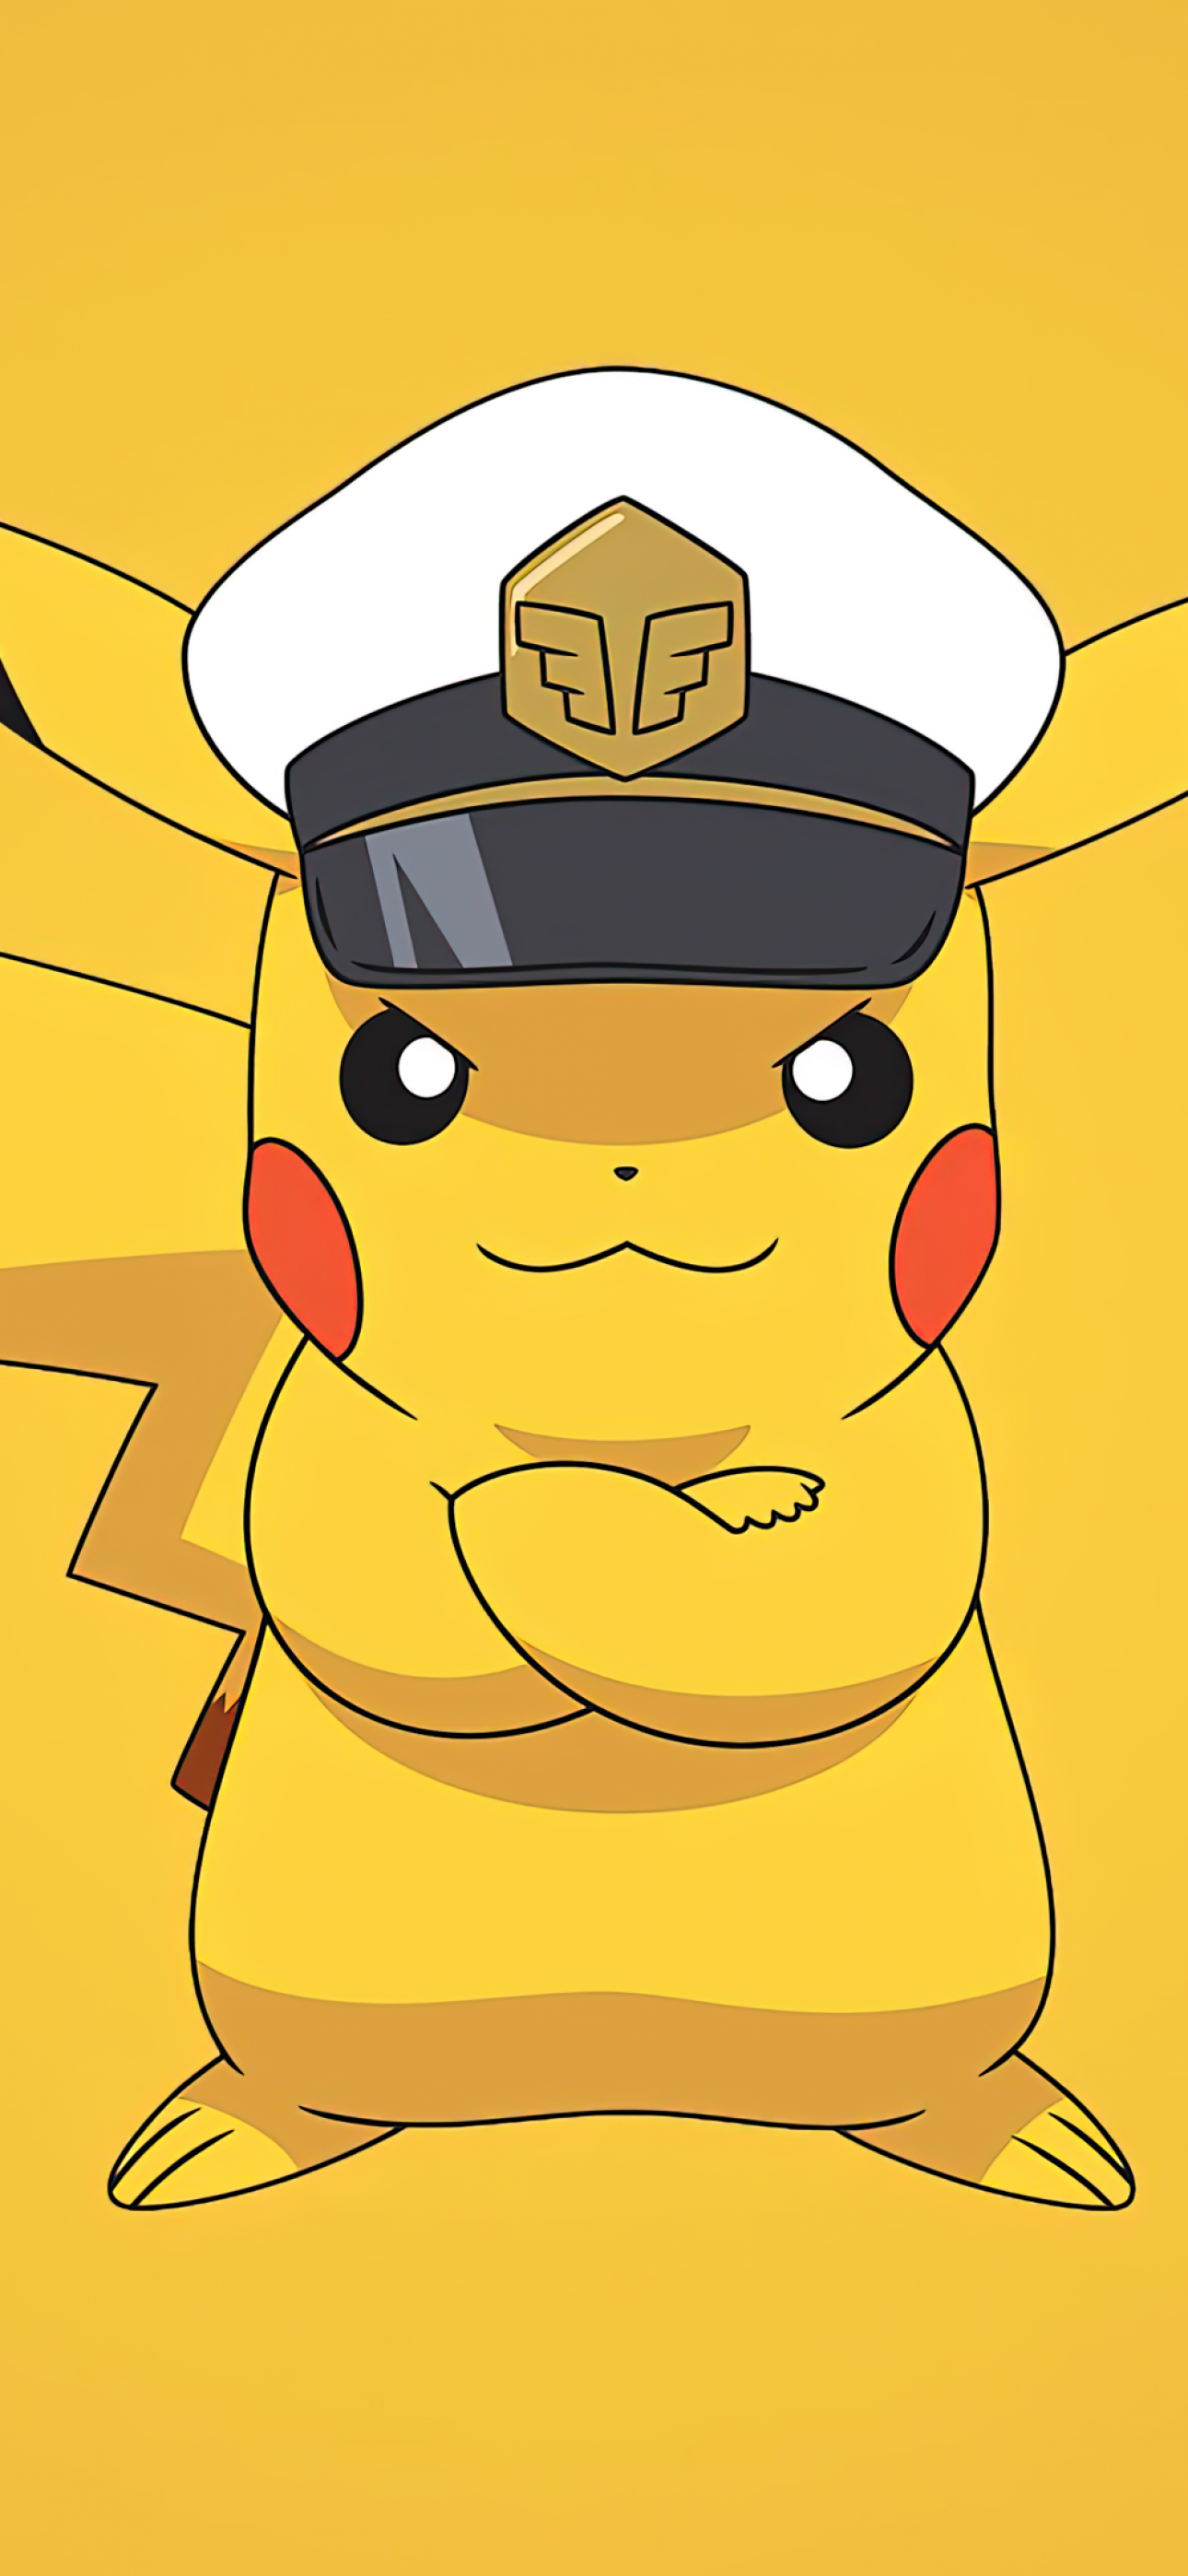 Wallpaper ID 314280  Movie Pokémon Detective Pikachu Phone Wallpaper  Pikachu 1440x3040 free download